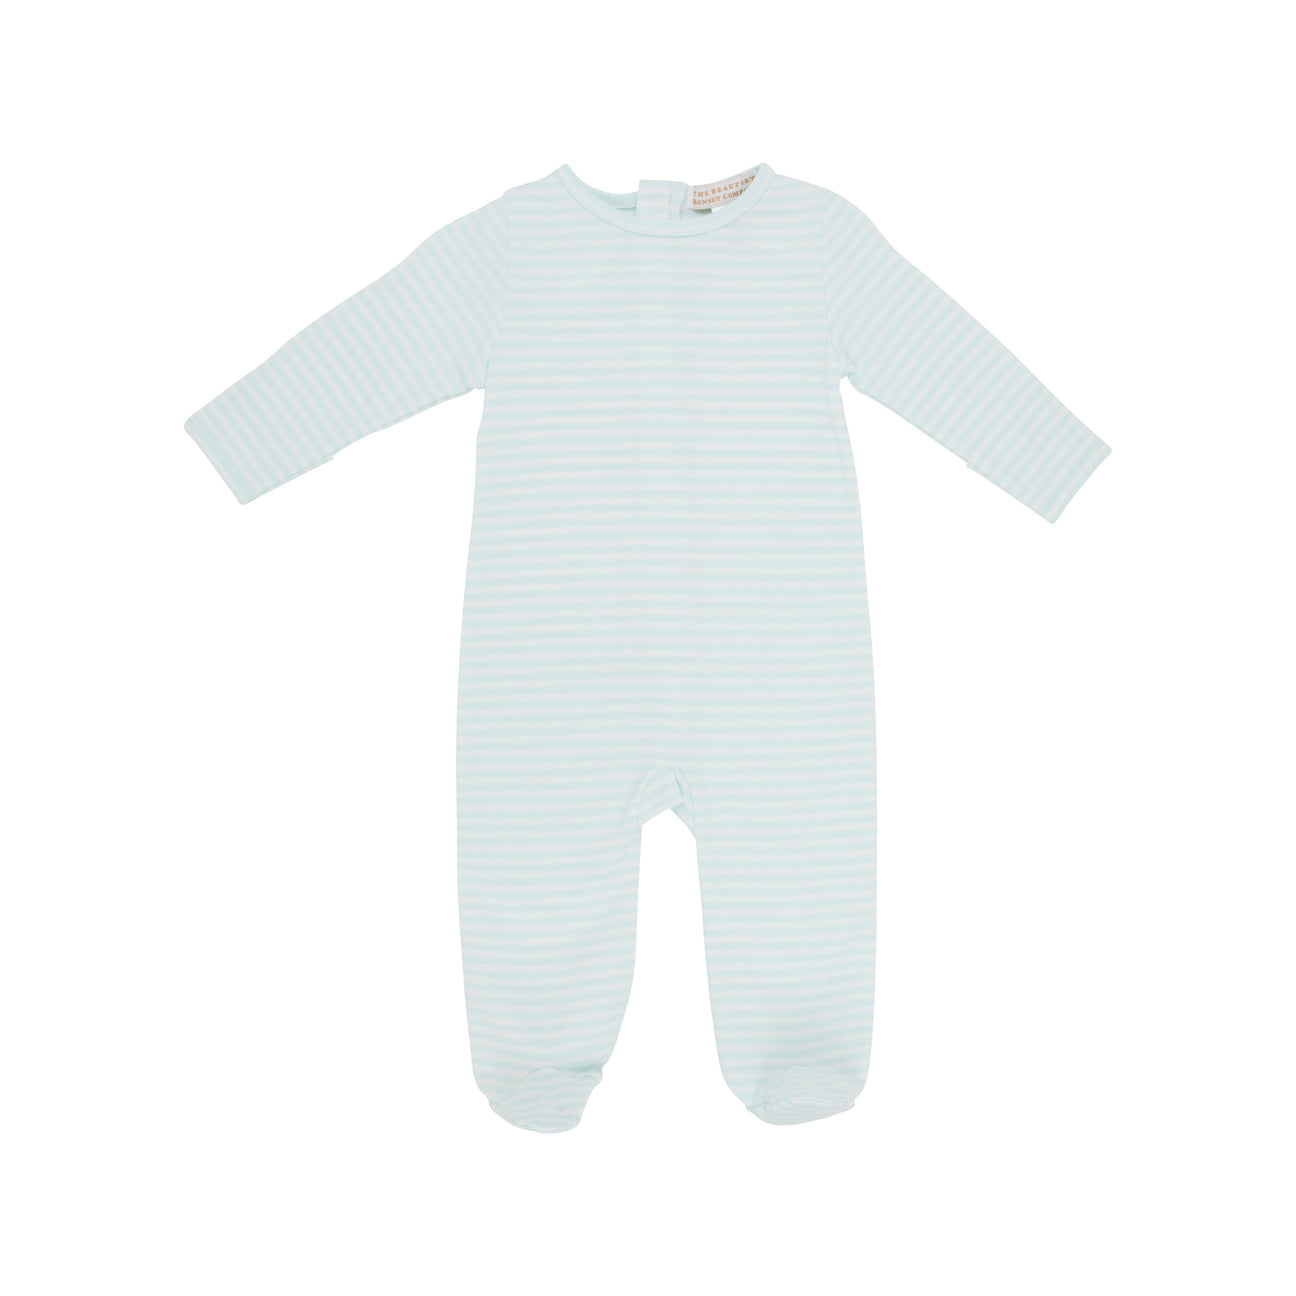 Little Babies Apparel – One Piece Outfits – The Beaufort Bonnet Company